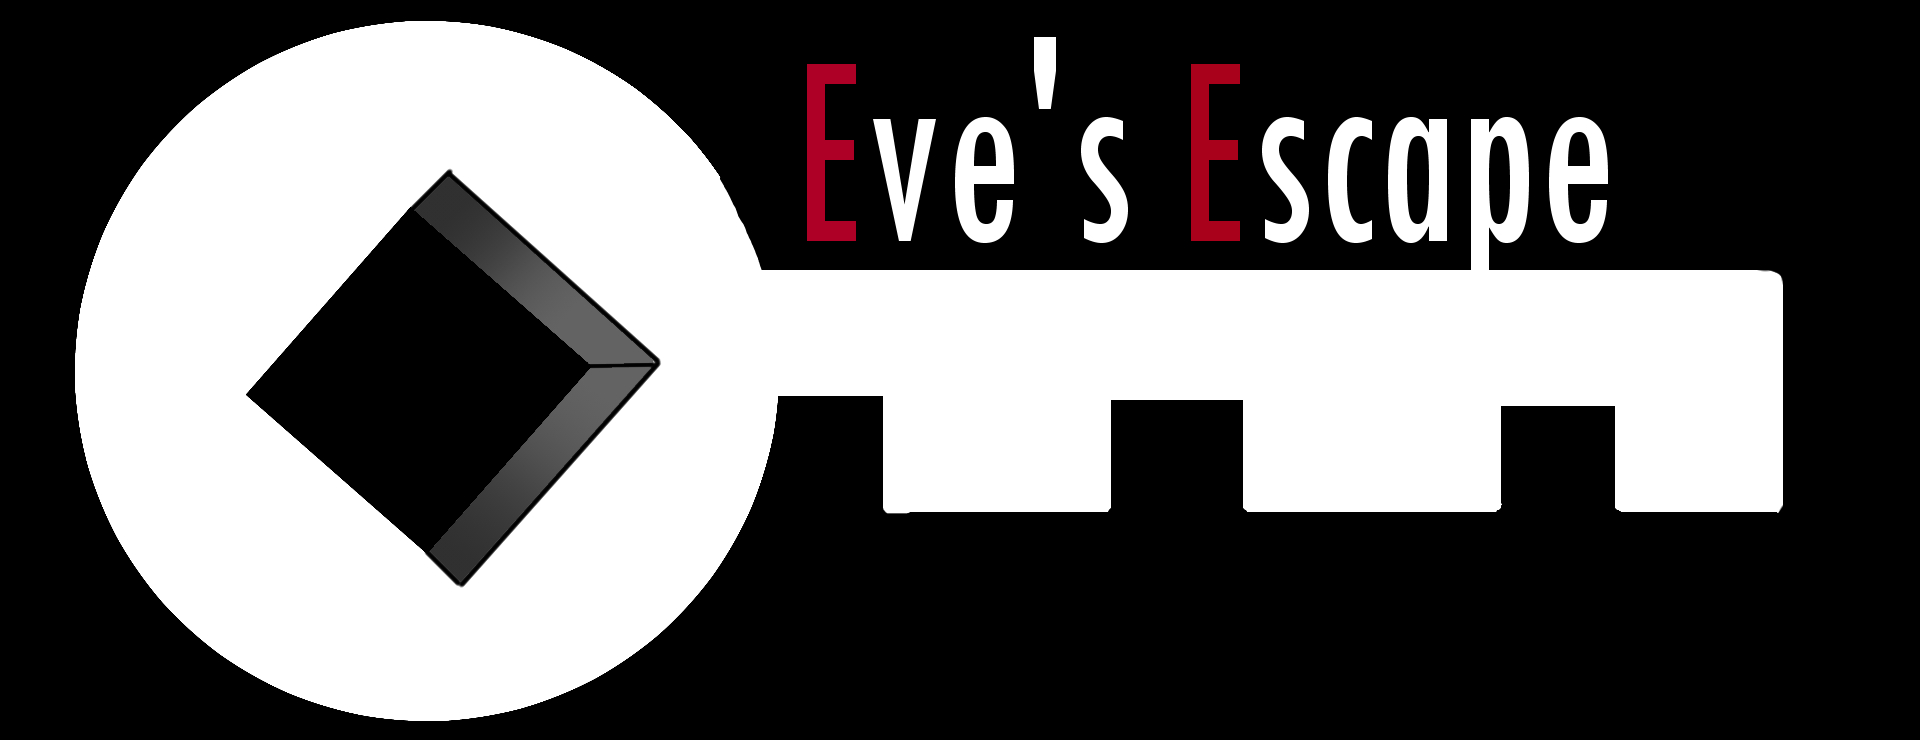 Eve's Escape